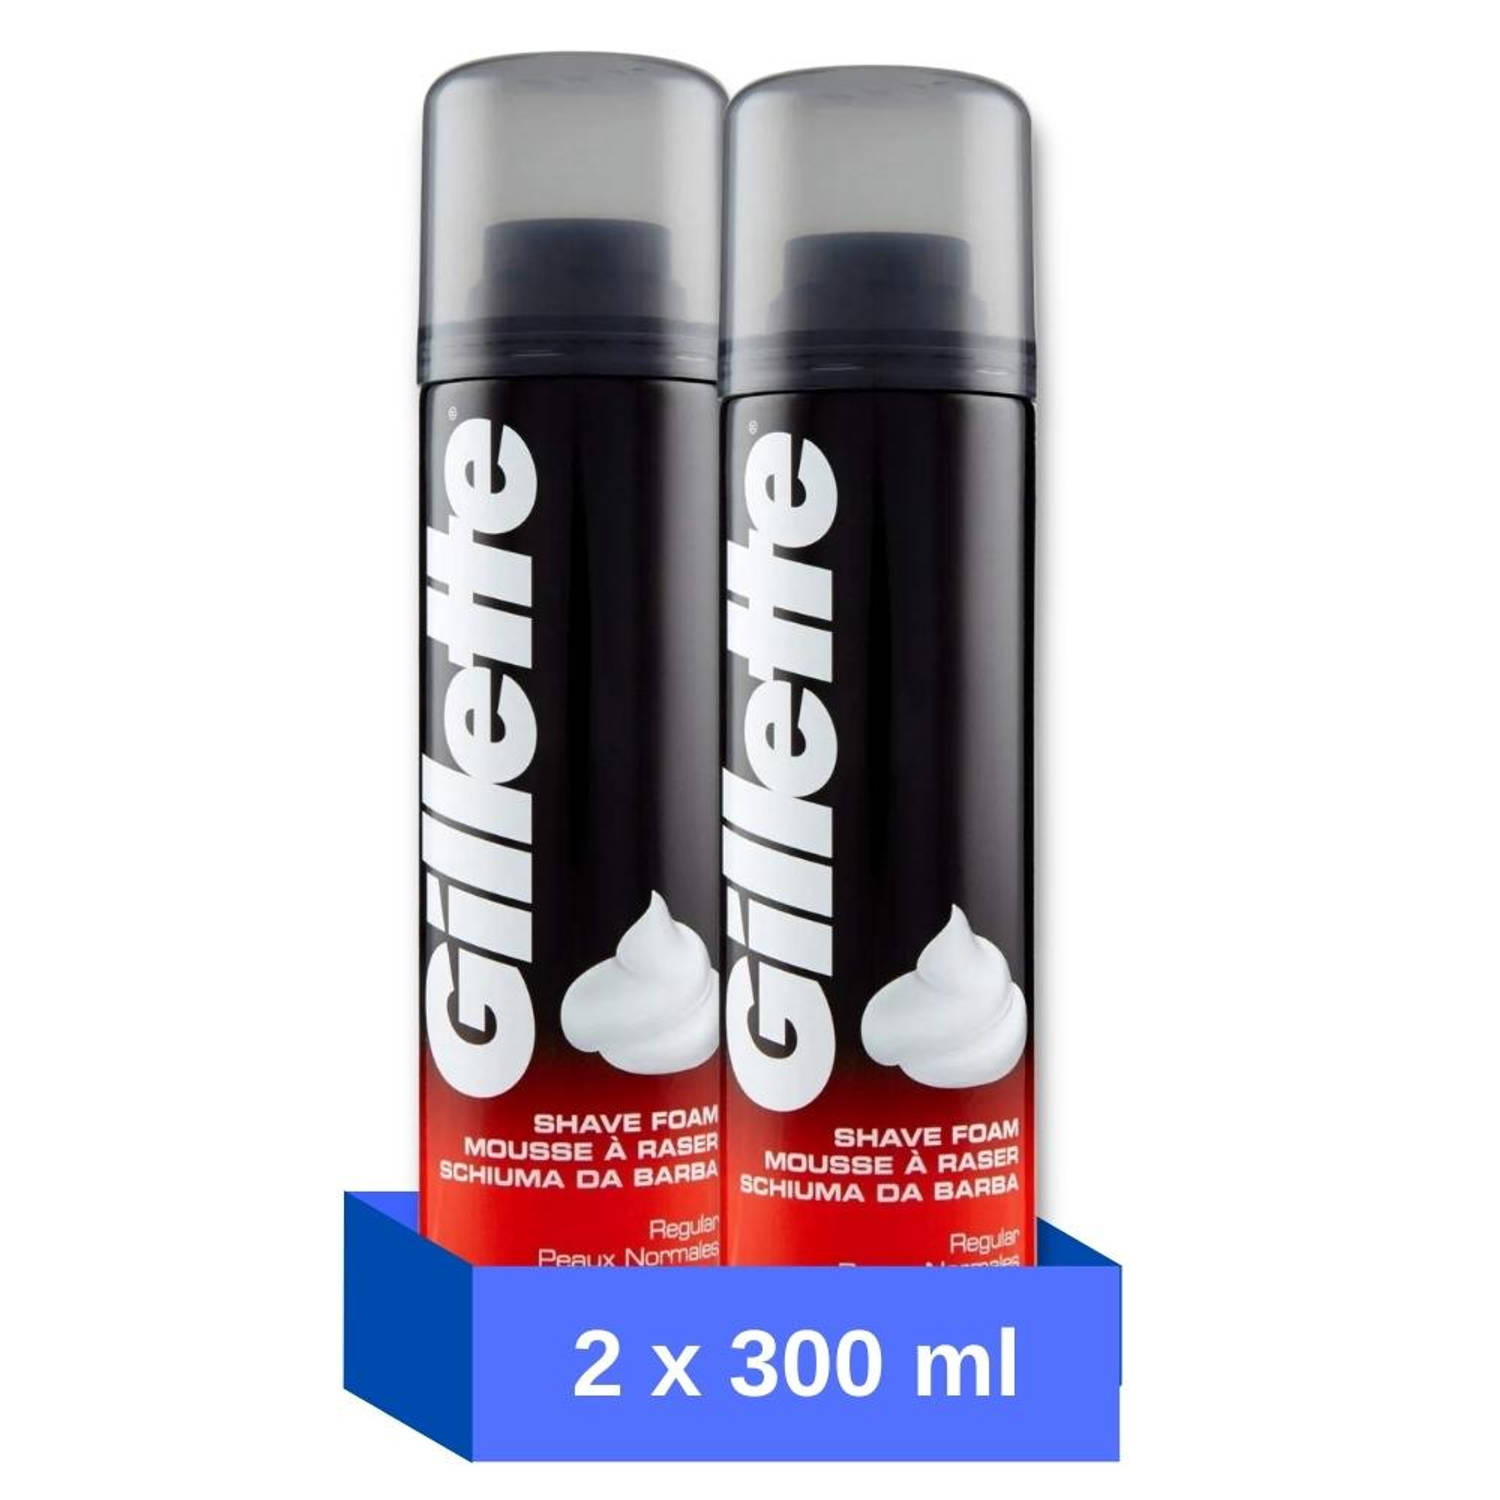 Gillette Basic Scheerschuim Regular - 300 ml - 2 stuks